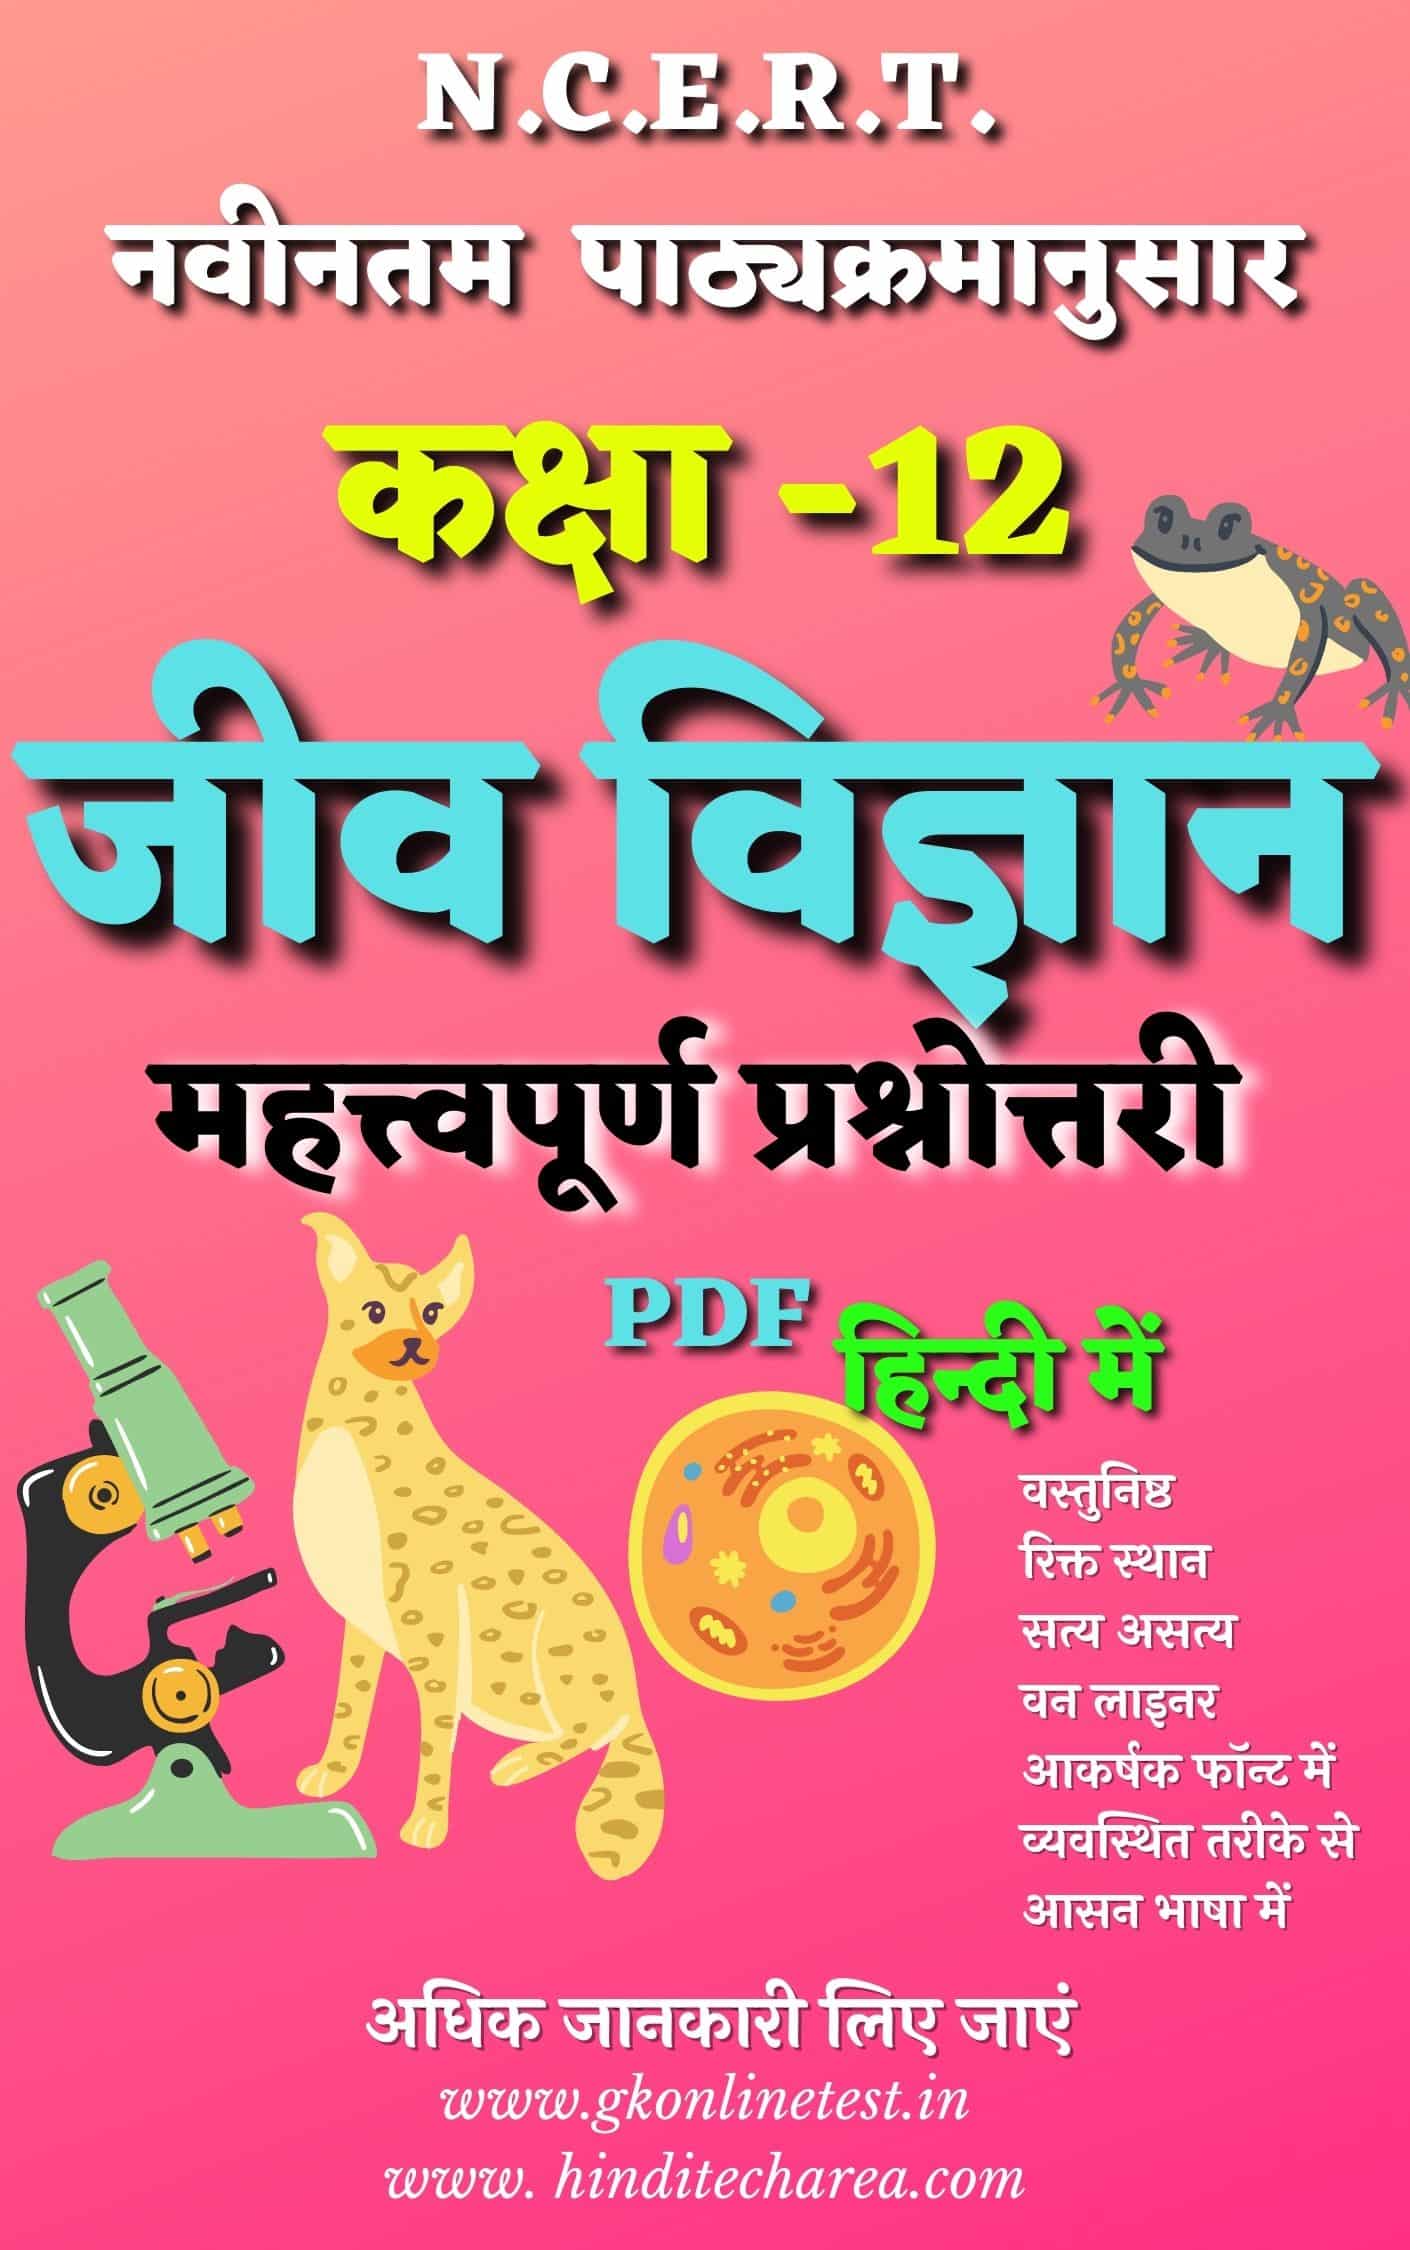 ncert biology class 12 pdf in hindi 